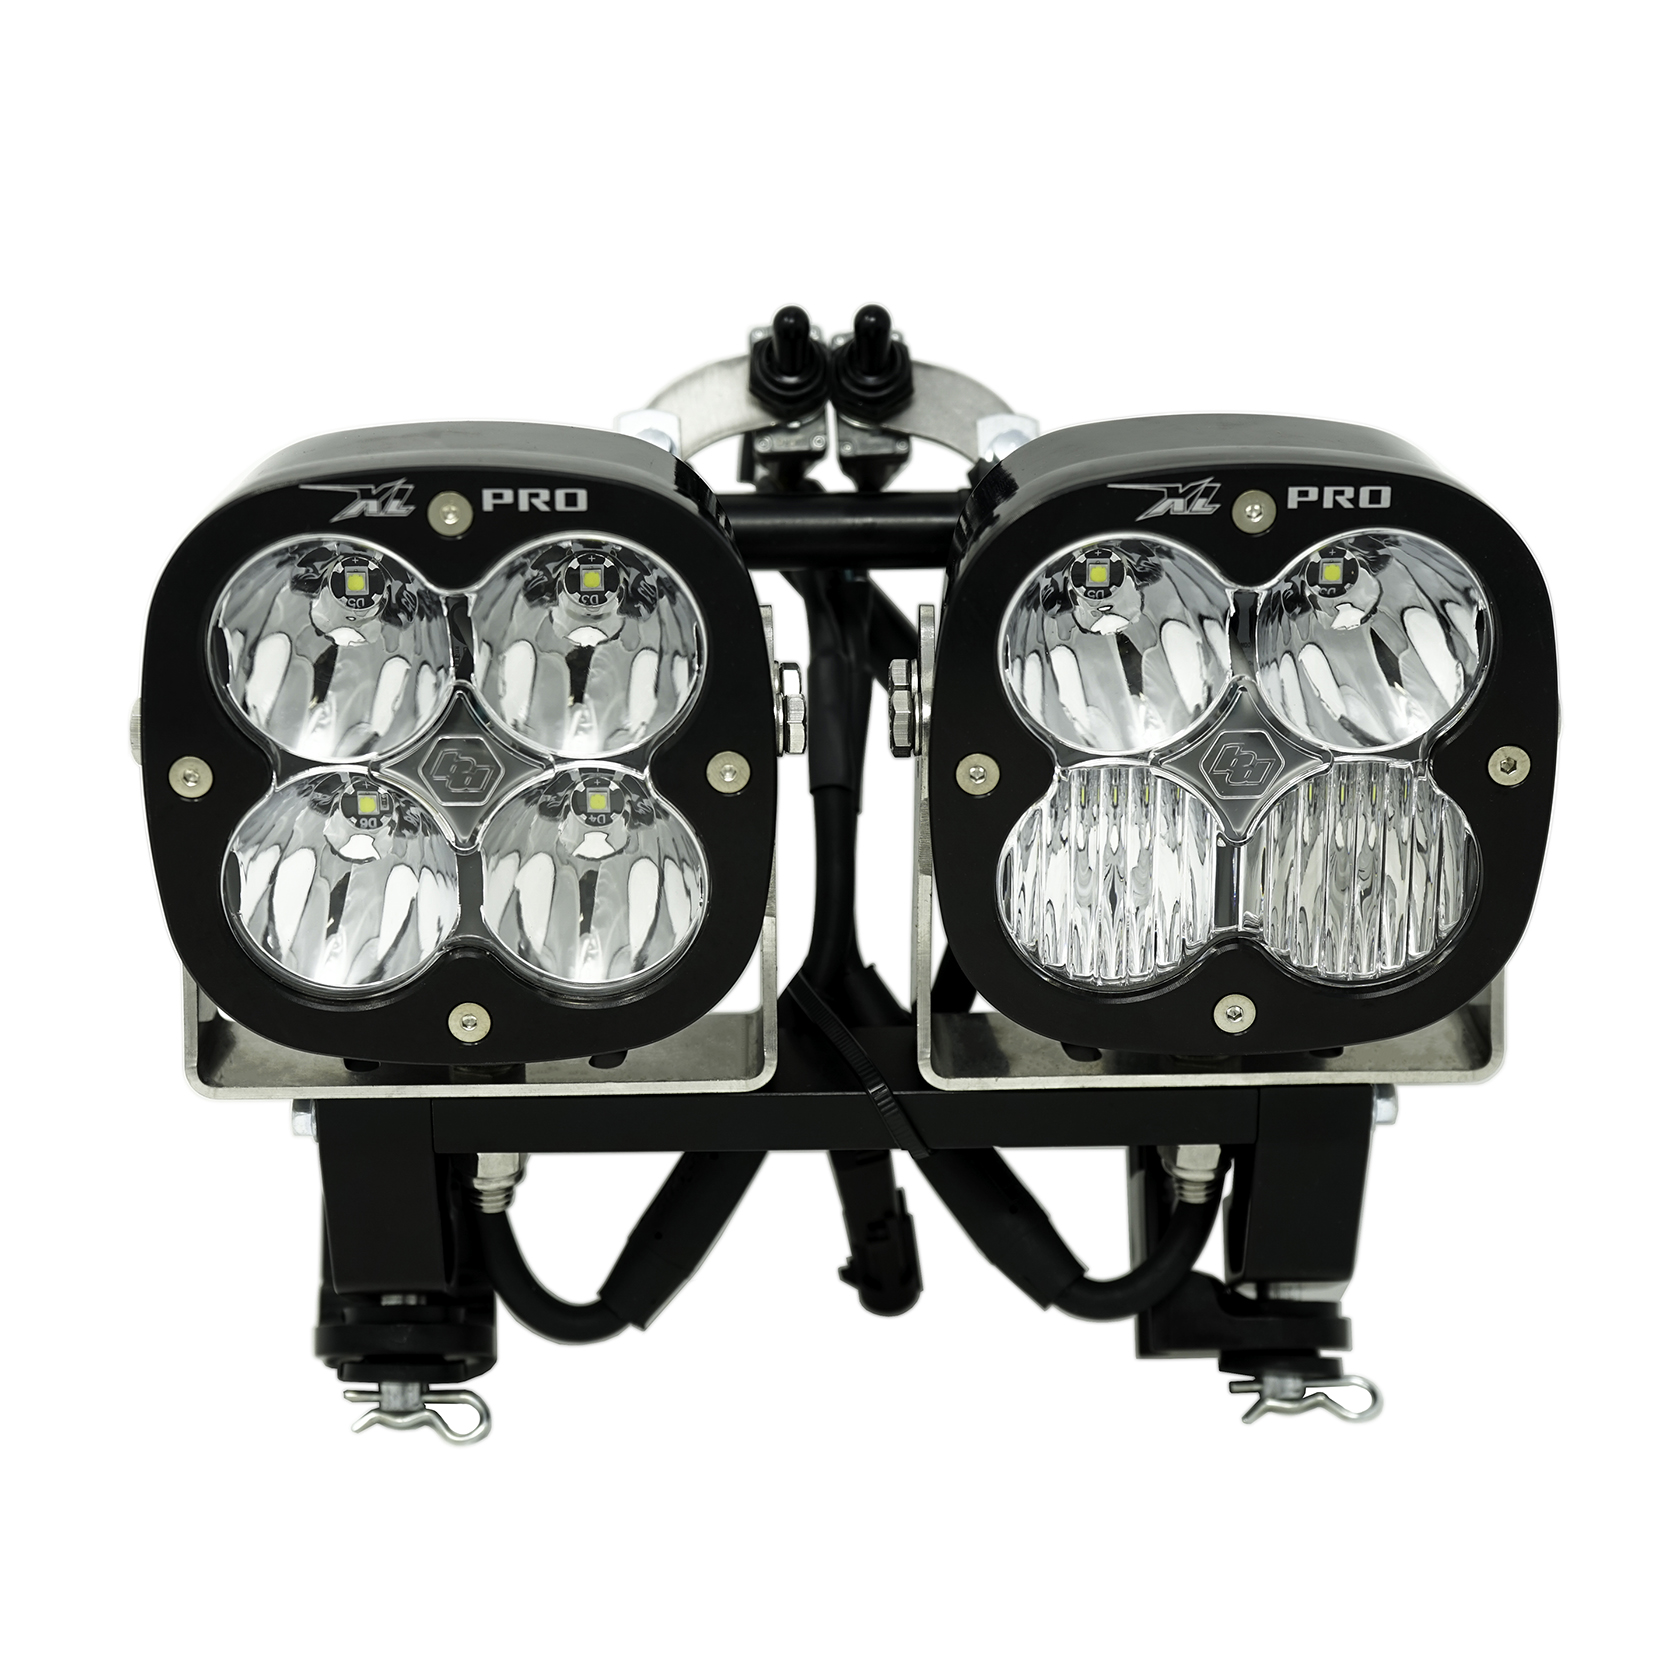 XL Pro, Dual Motorcycle Race Light